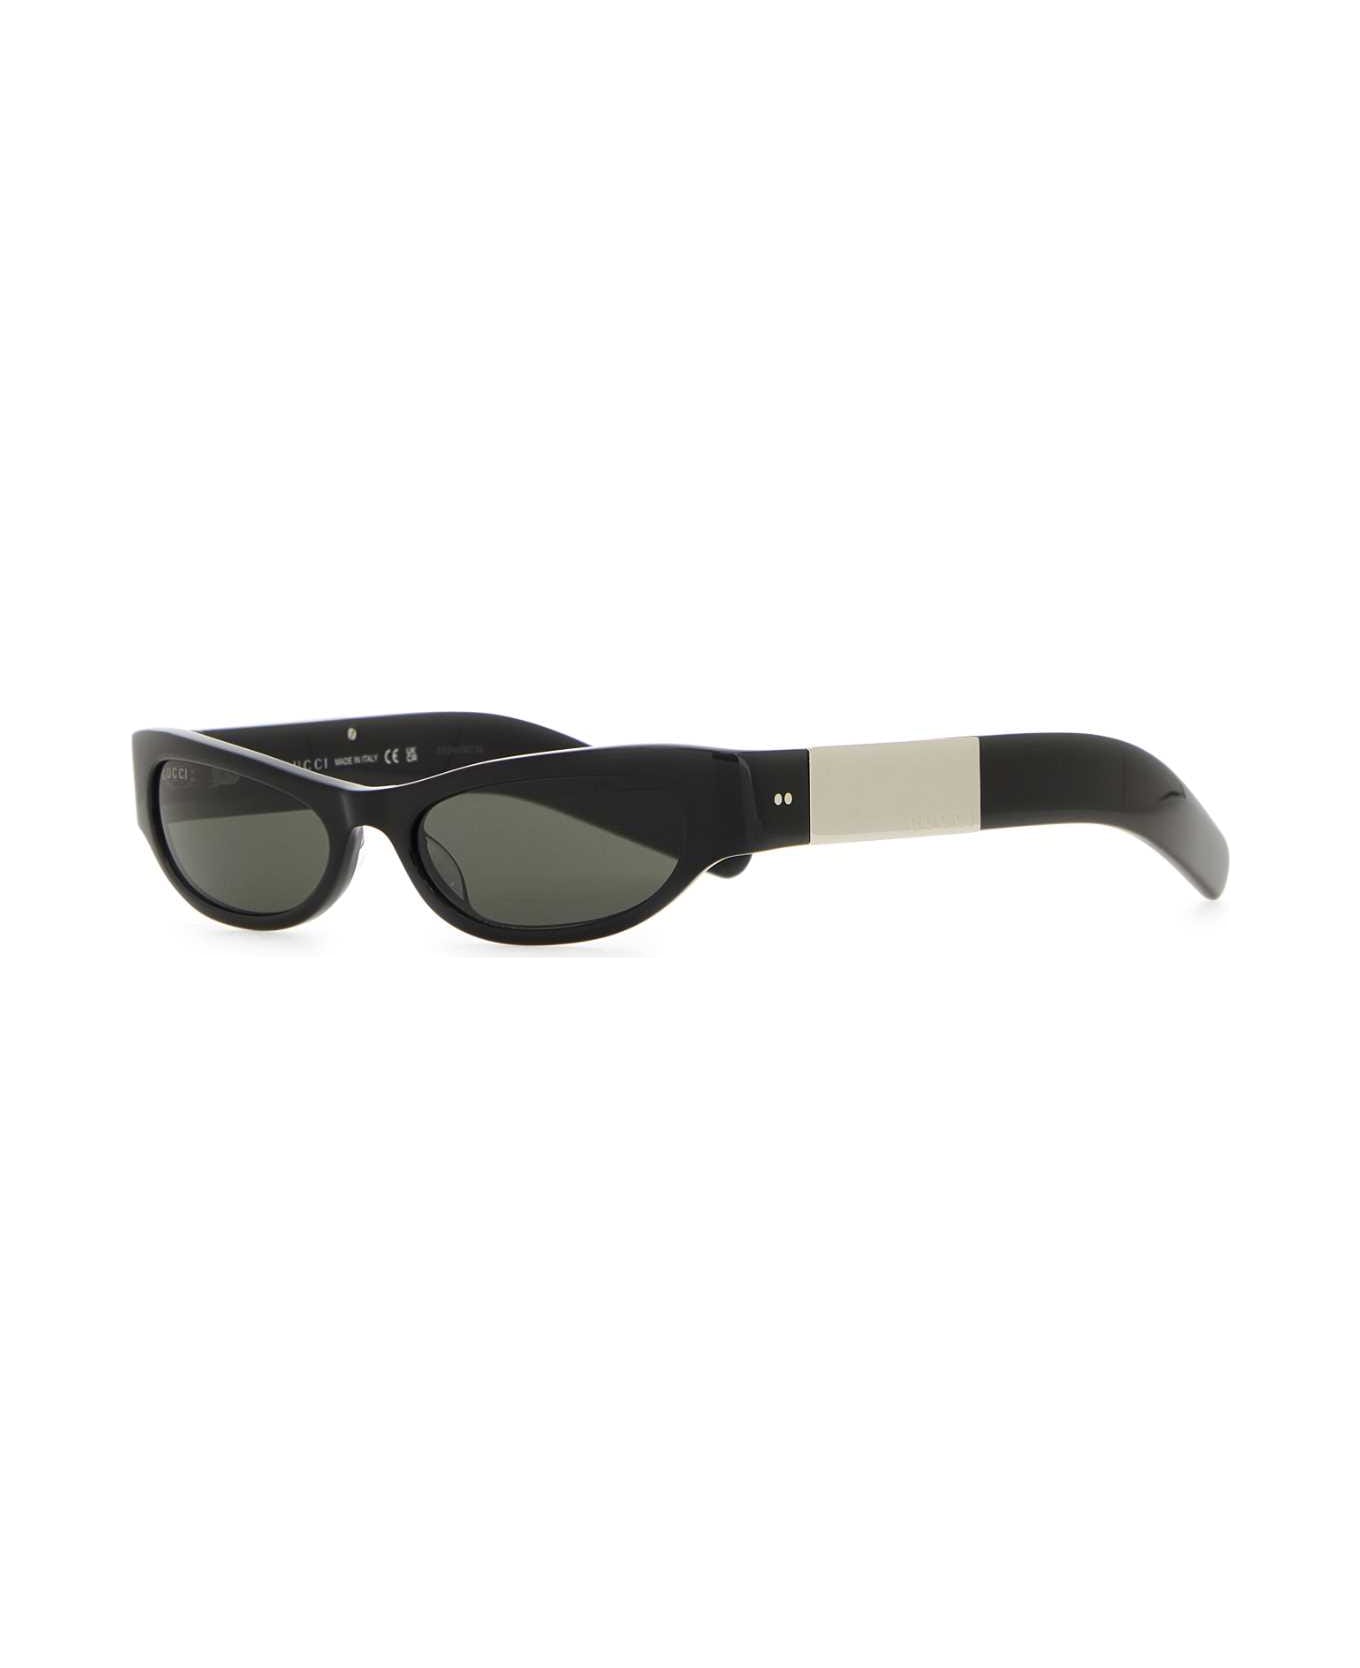 Gucci Black Acetate Sunglasses - 1012 サングラス